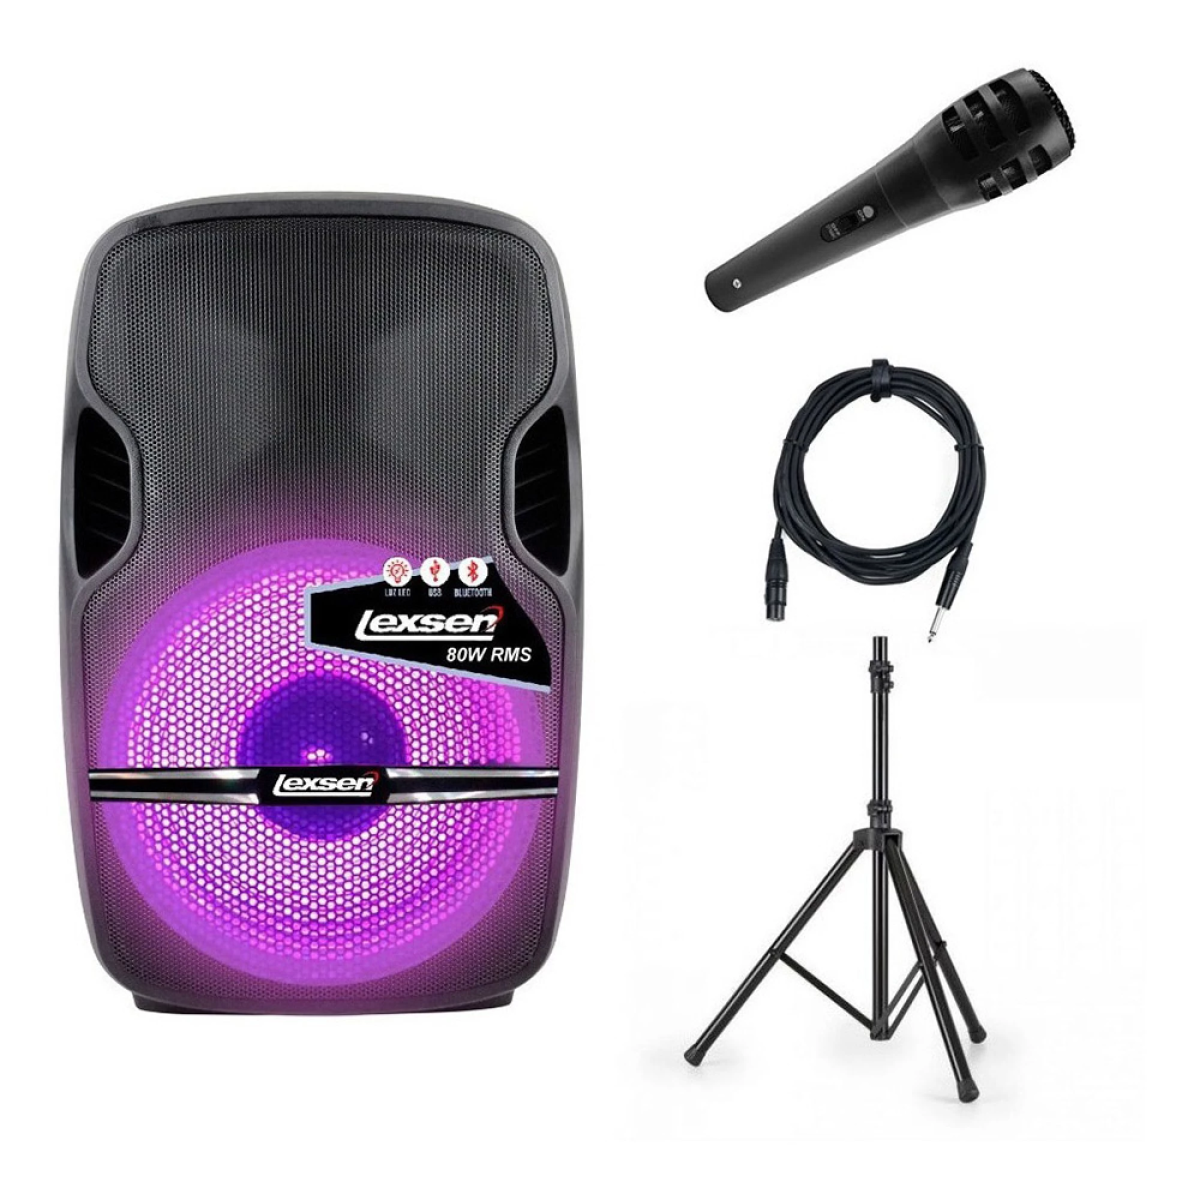 Kit de Caja Acústica Lexsen Tiny 80W Bluetooth RGB + Micrófono + Soporte Negro